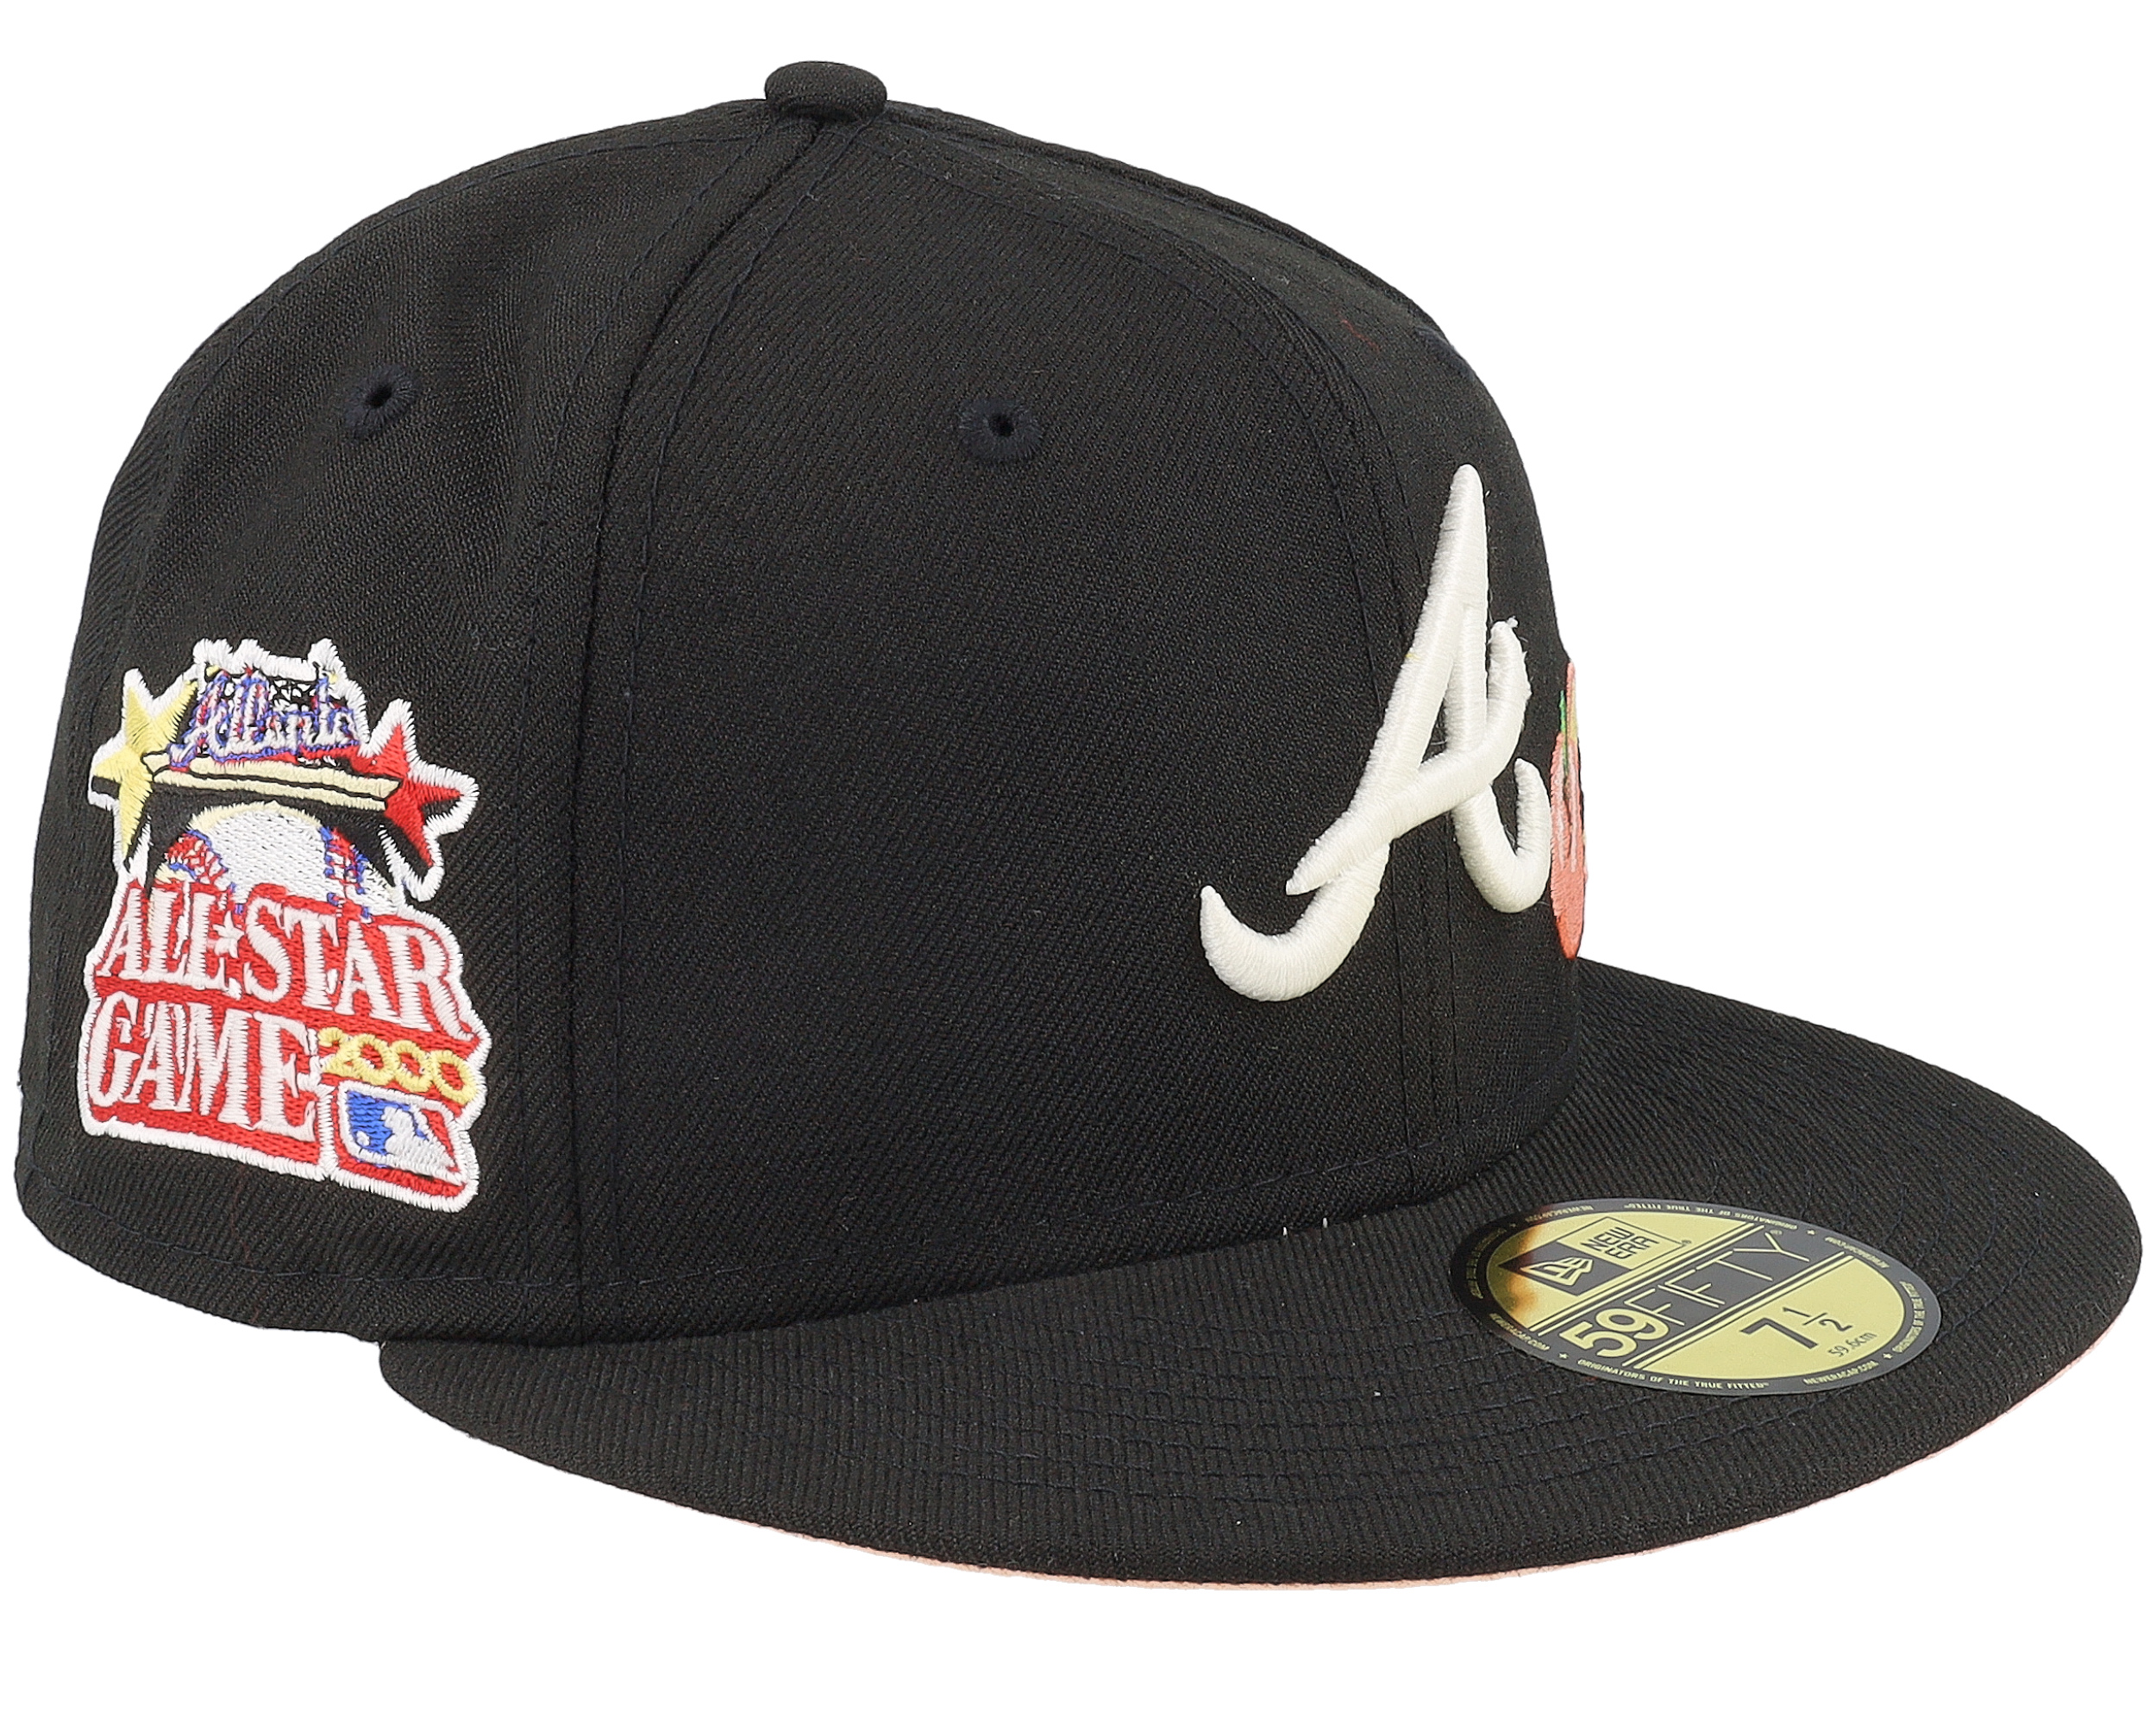 Atlanta Braves 59FIFTY Black/Peach Fitted - New Era lippis | Hatstore.fi